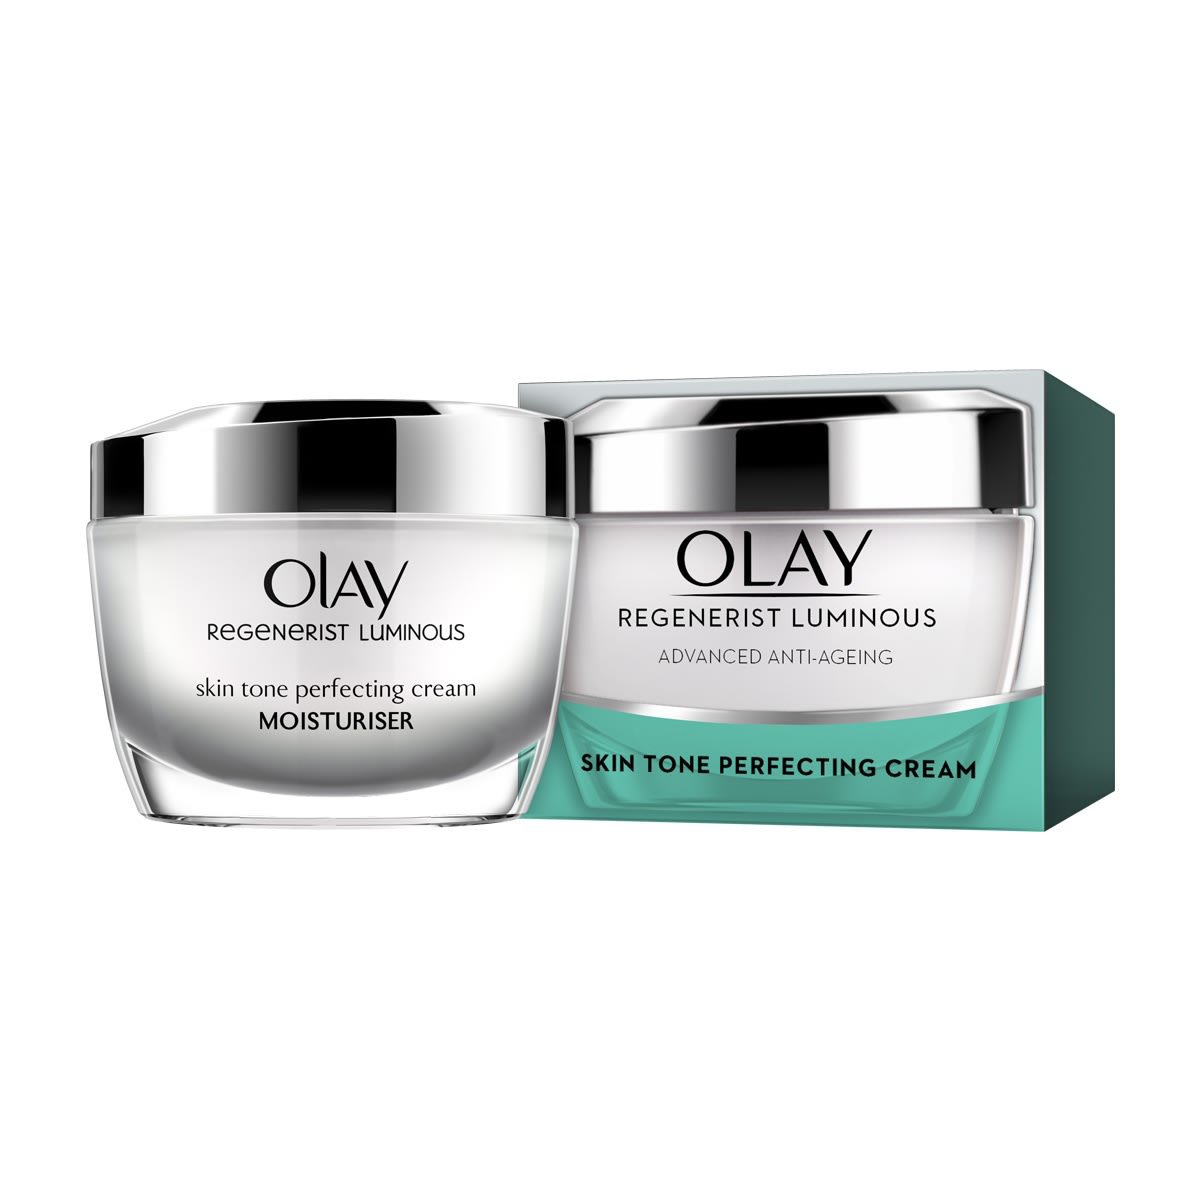 Olay Regenerist Luminous Skin Tone Perfecting Cream - 50ml